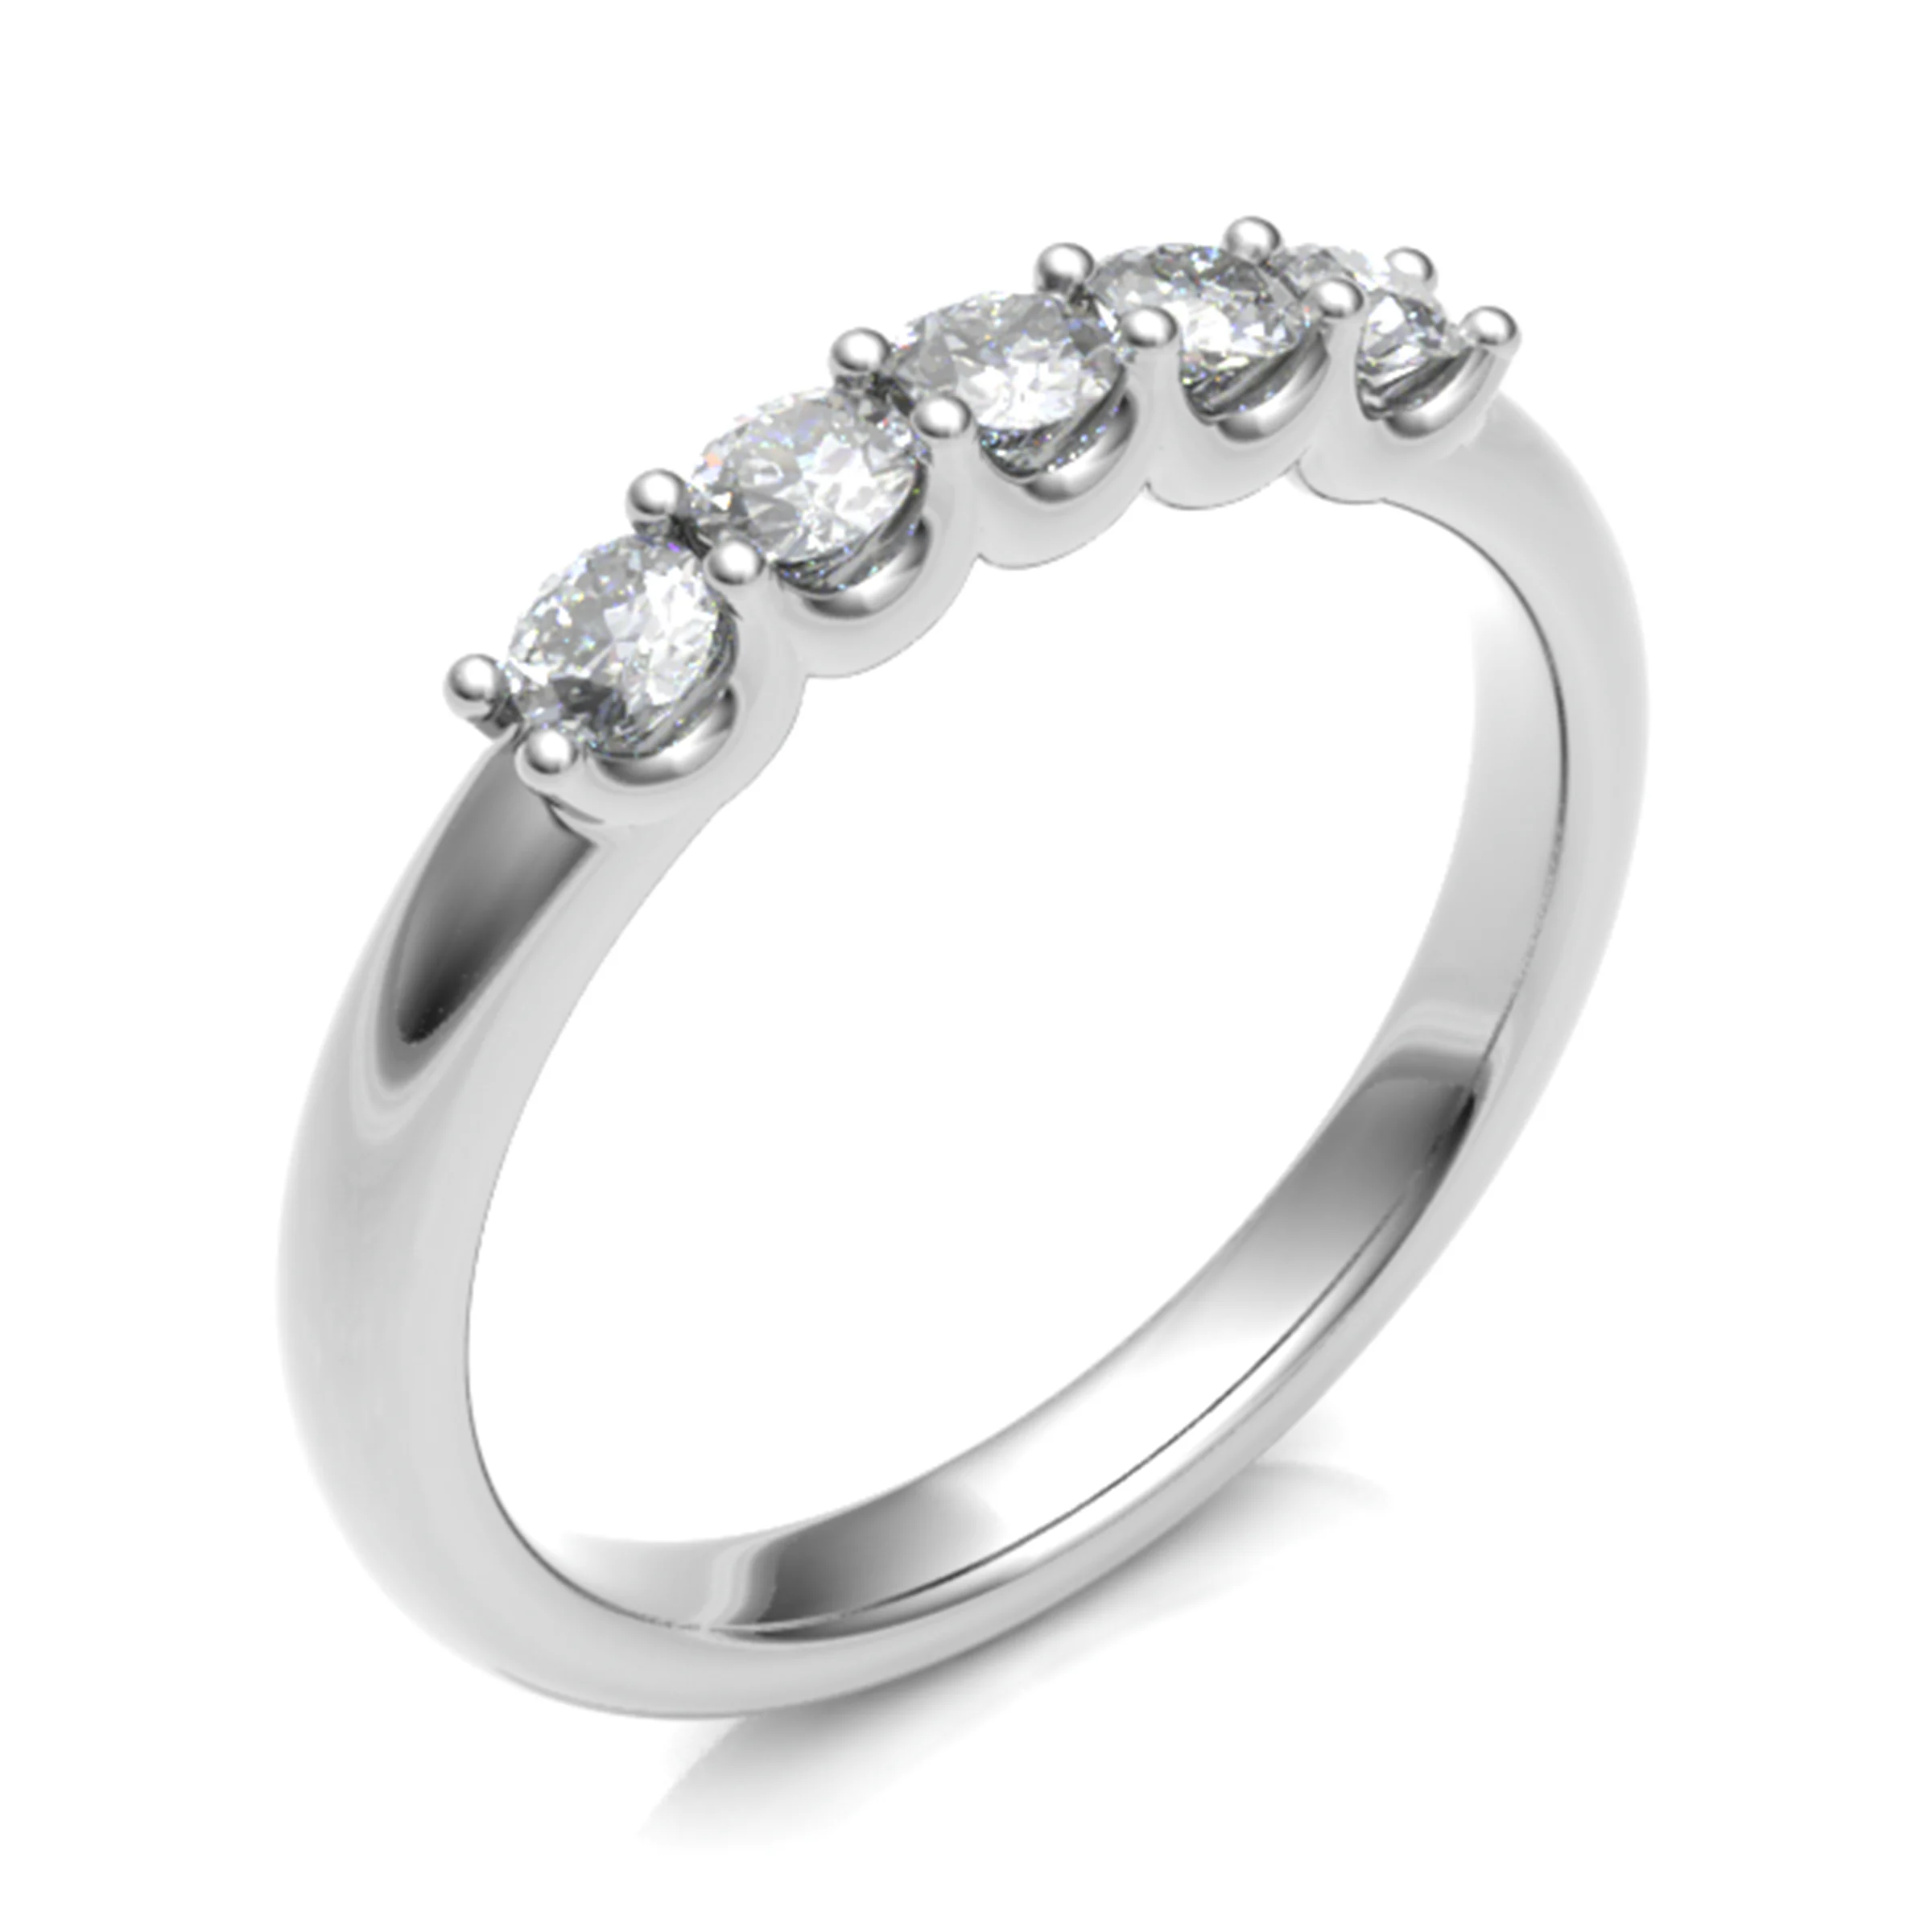 0.20 - 1.00 Carat Lab-Created 5 Stone Diamond Rings